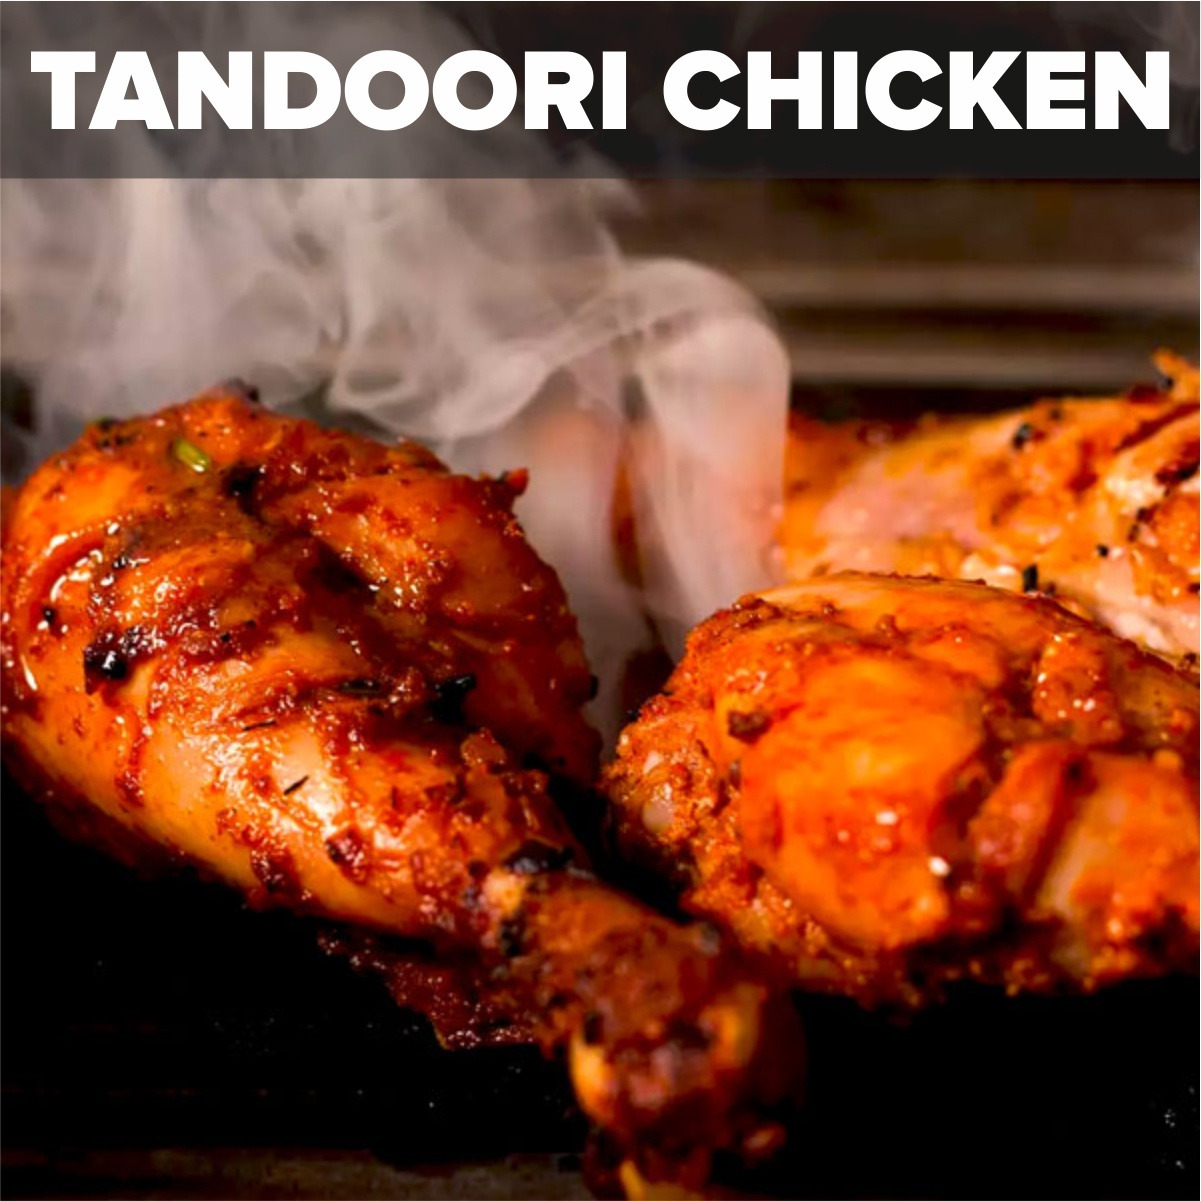 EL The Cook Peshwari Tandoori Marinade, CONCENTRATE PASTE, Smoky & Spicy Indian Meat Marinade, 3 pack x 1.7oz, Vegetarian, Gluten Free (Flavor: Tandoori - 3 pack)